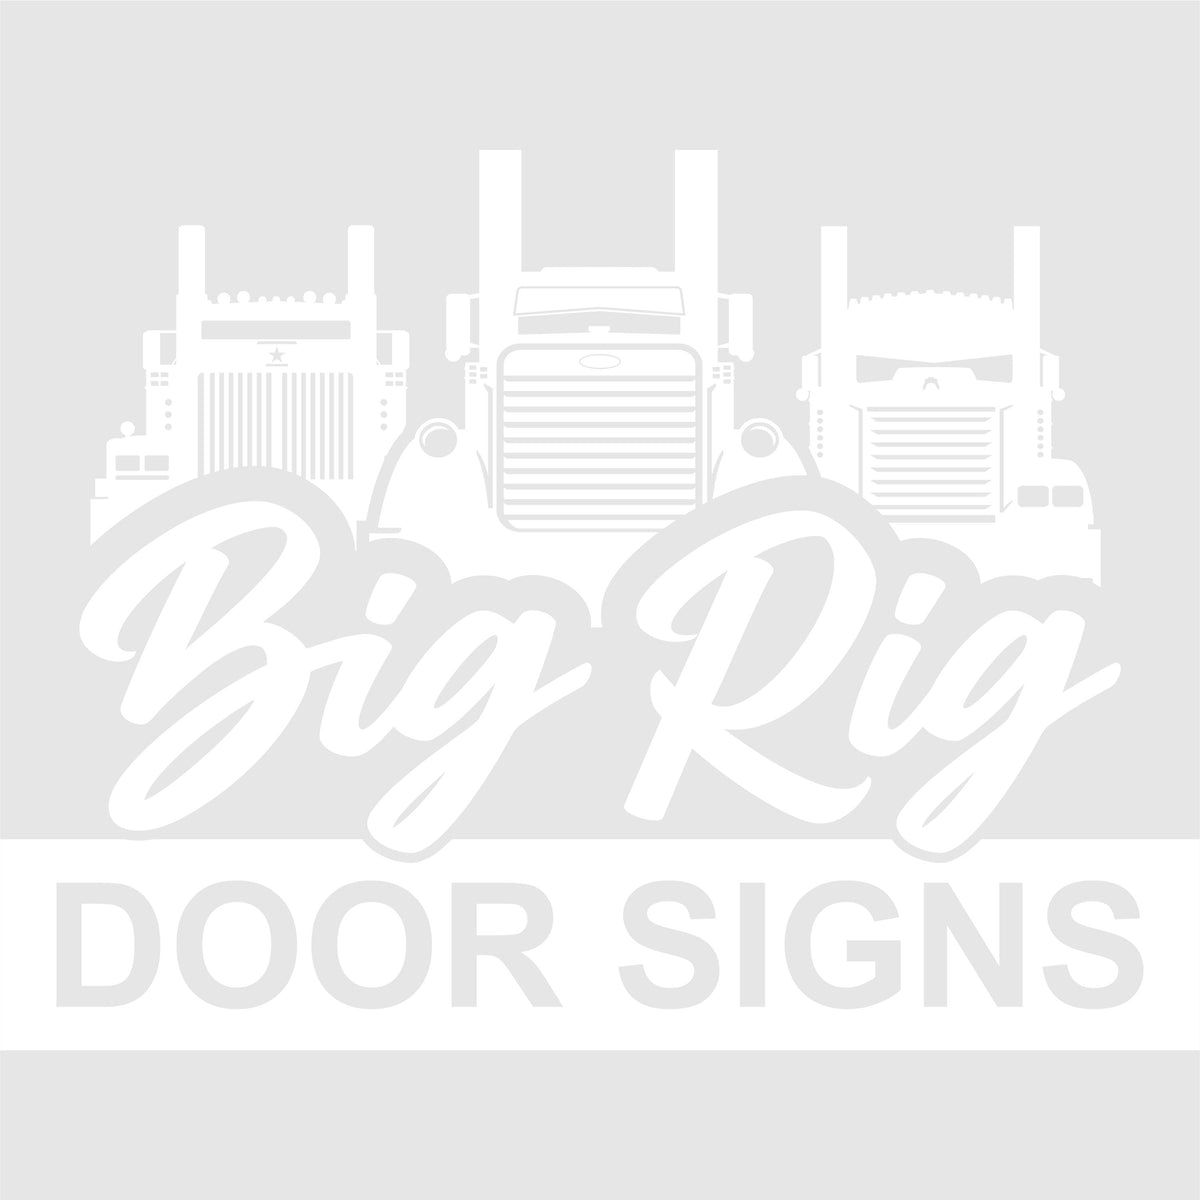 Set of 2 Big Rig - Door/Sleeper Signs - Vinyl Lettering - Decal -  Free Shipping